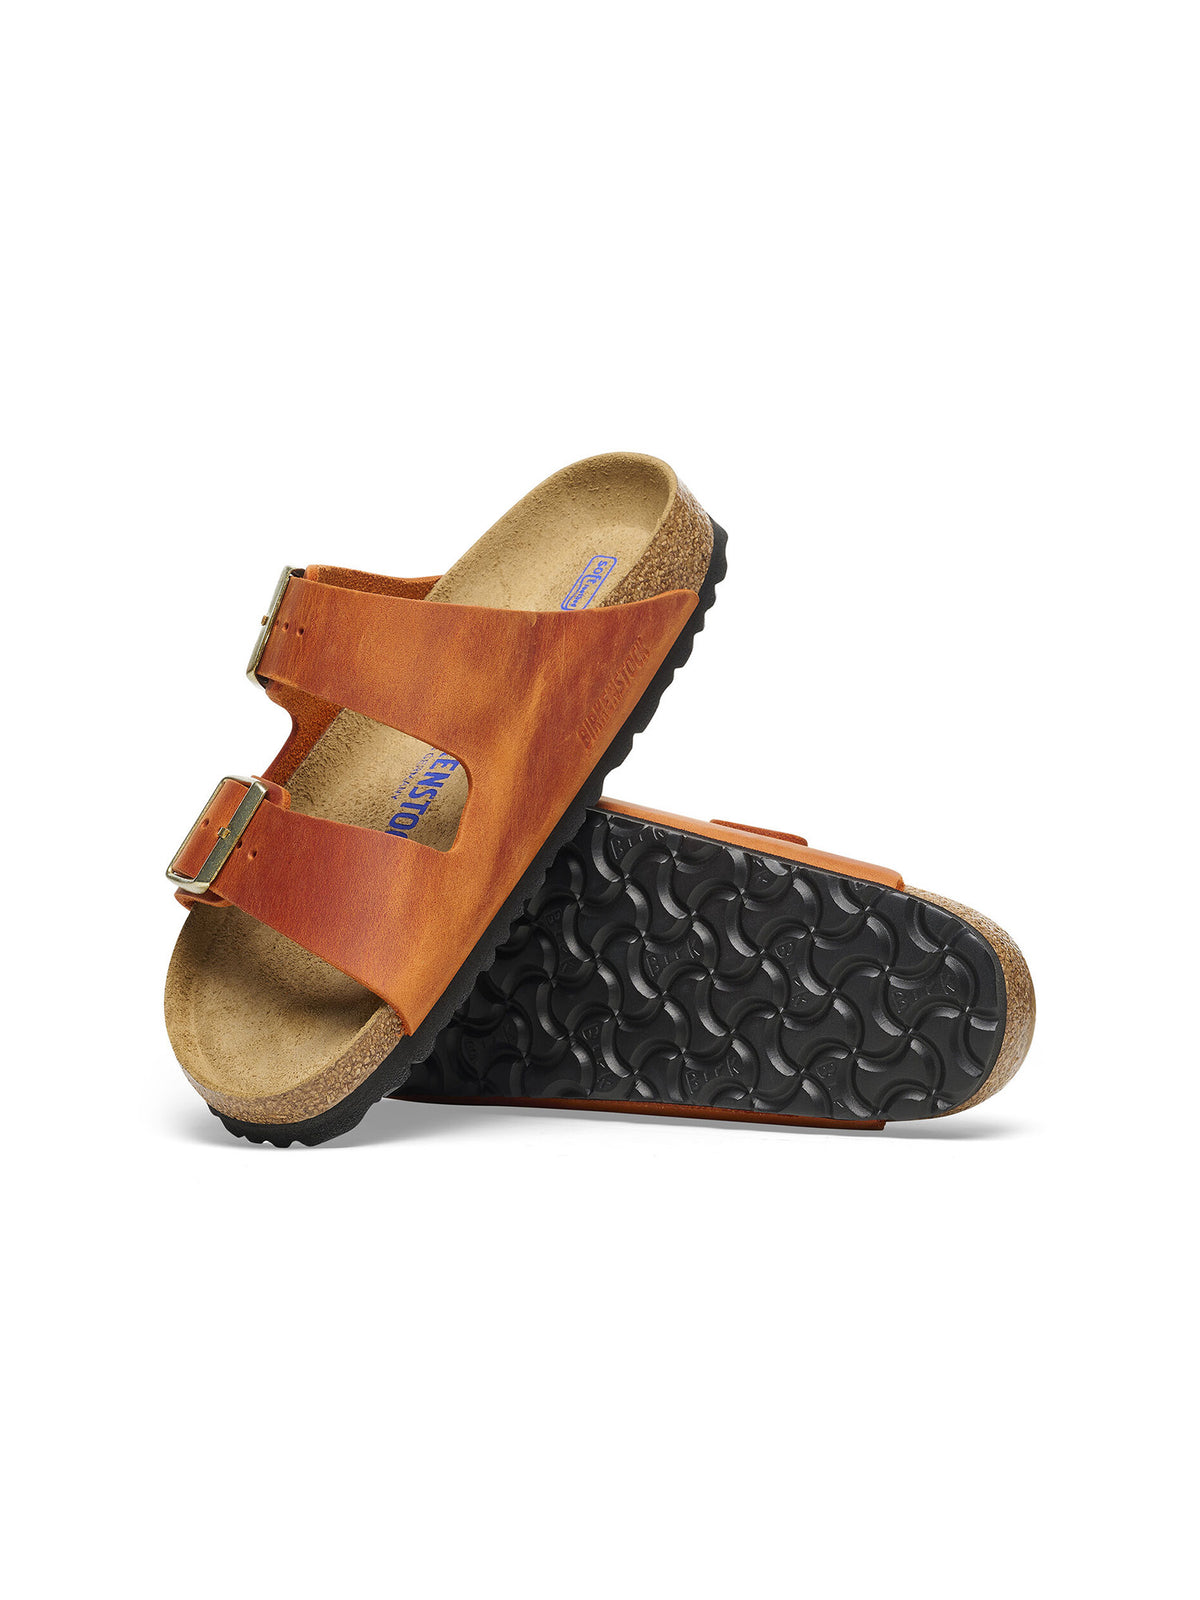 birkenstock arizona sandal in burnt orange oiled leather